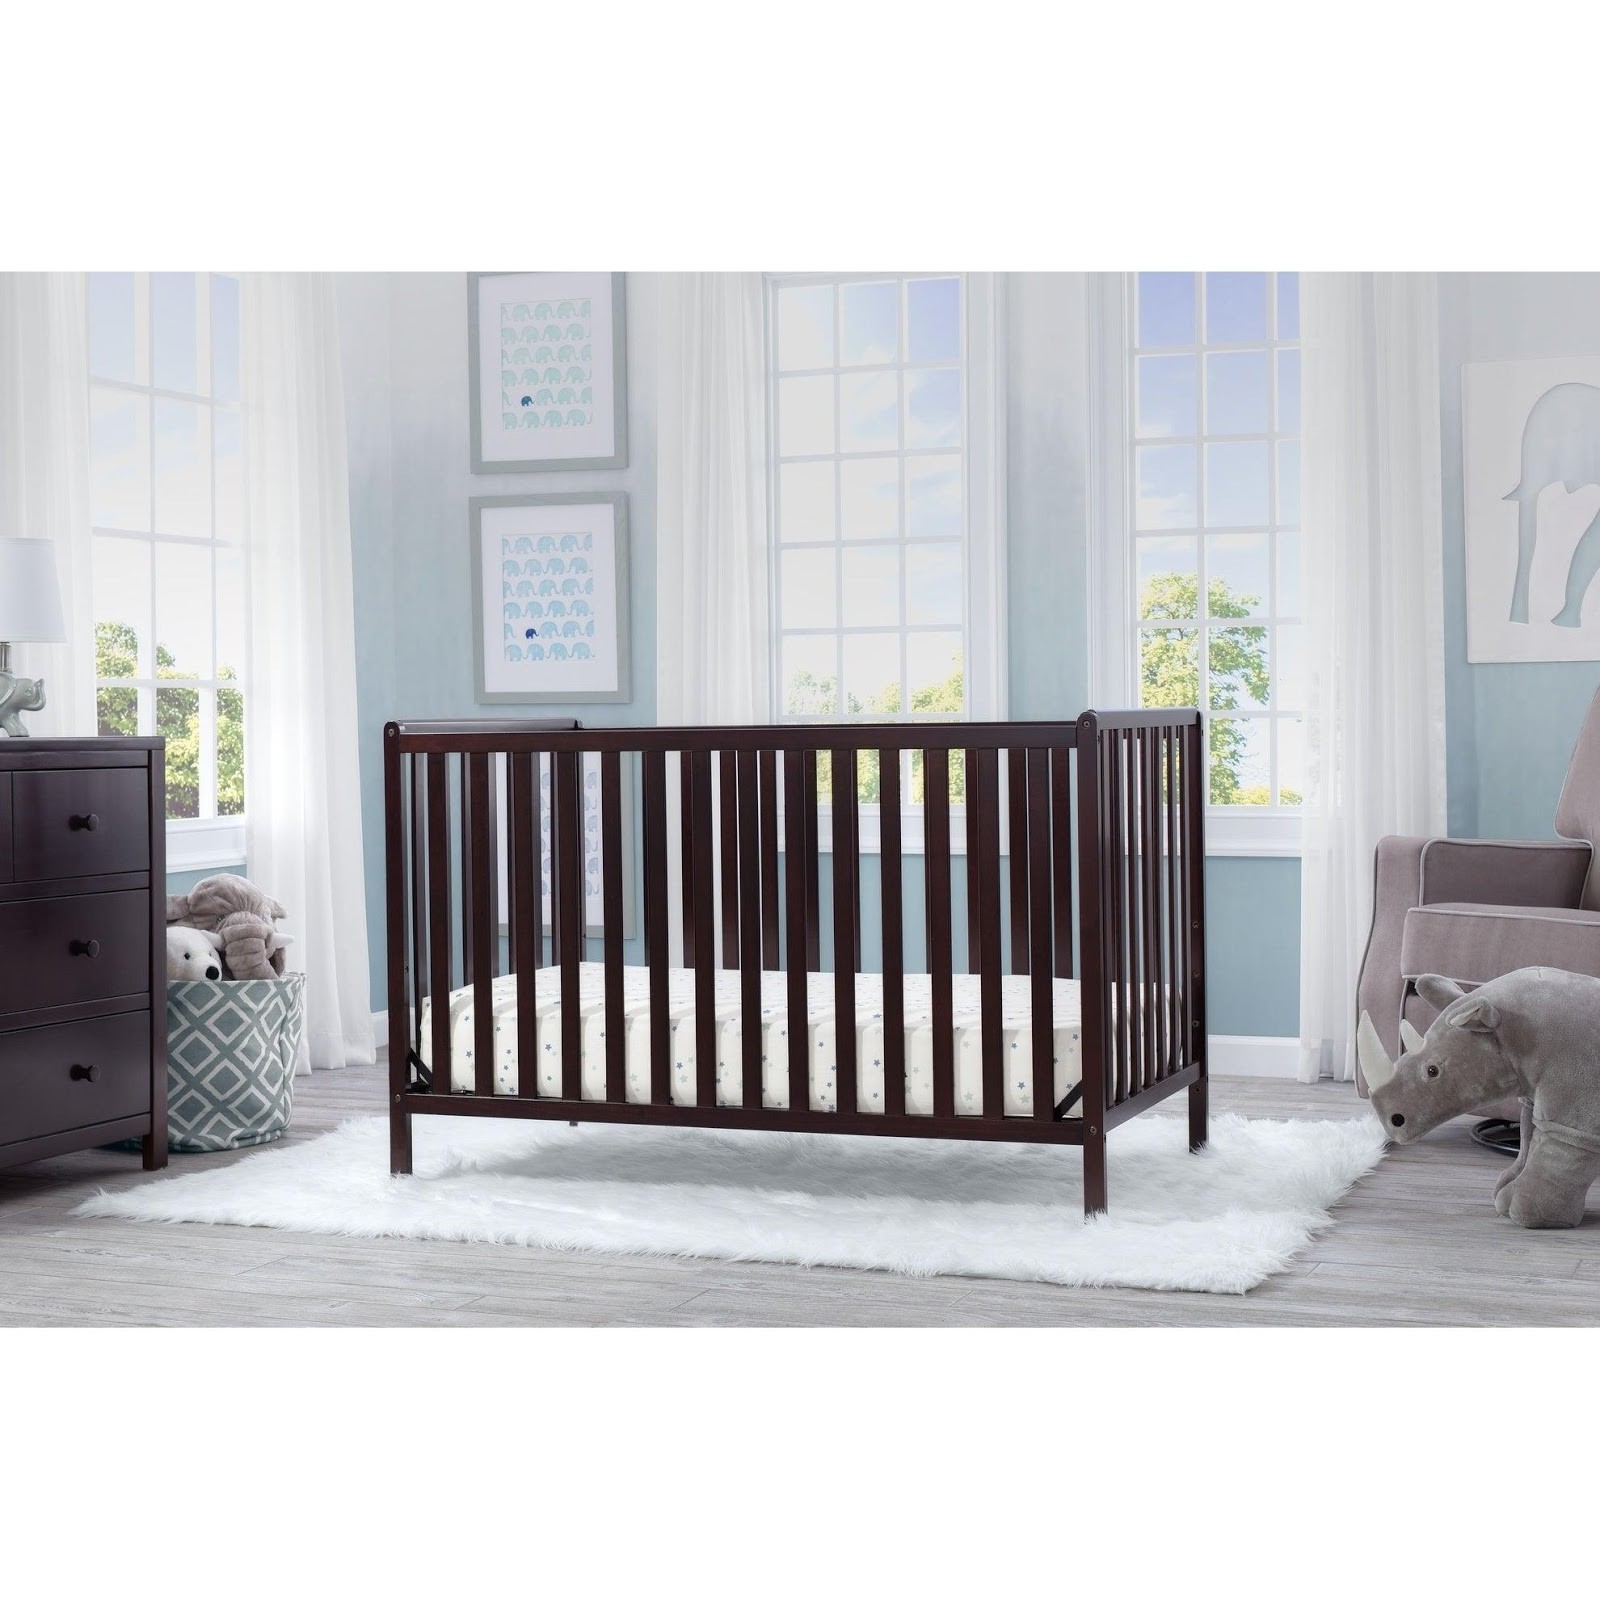 DELTA Standard Full Size Crib